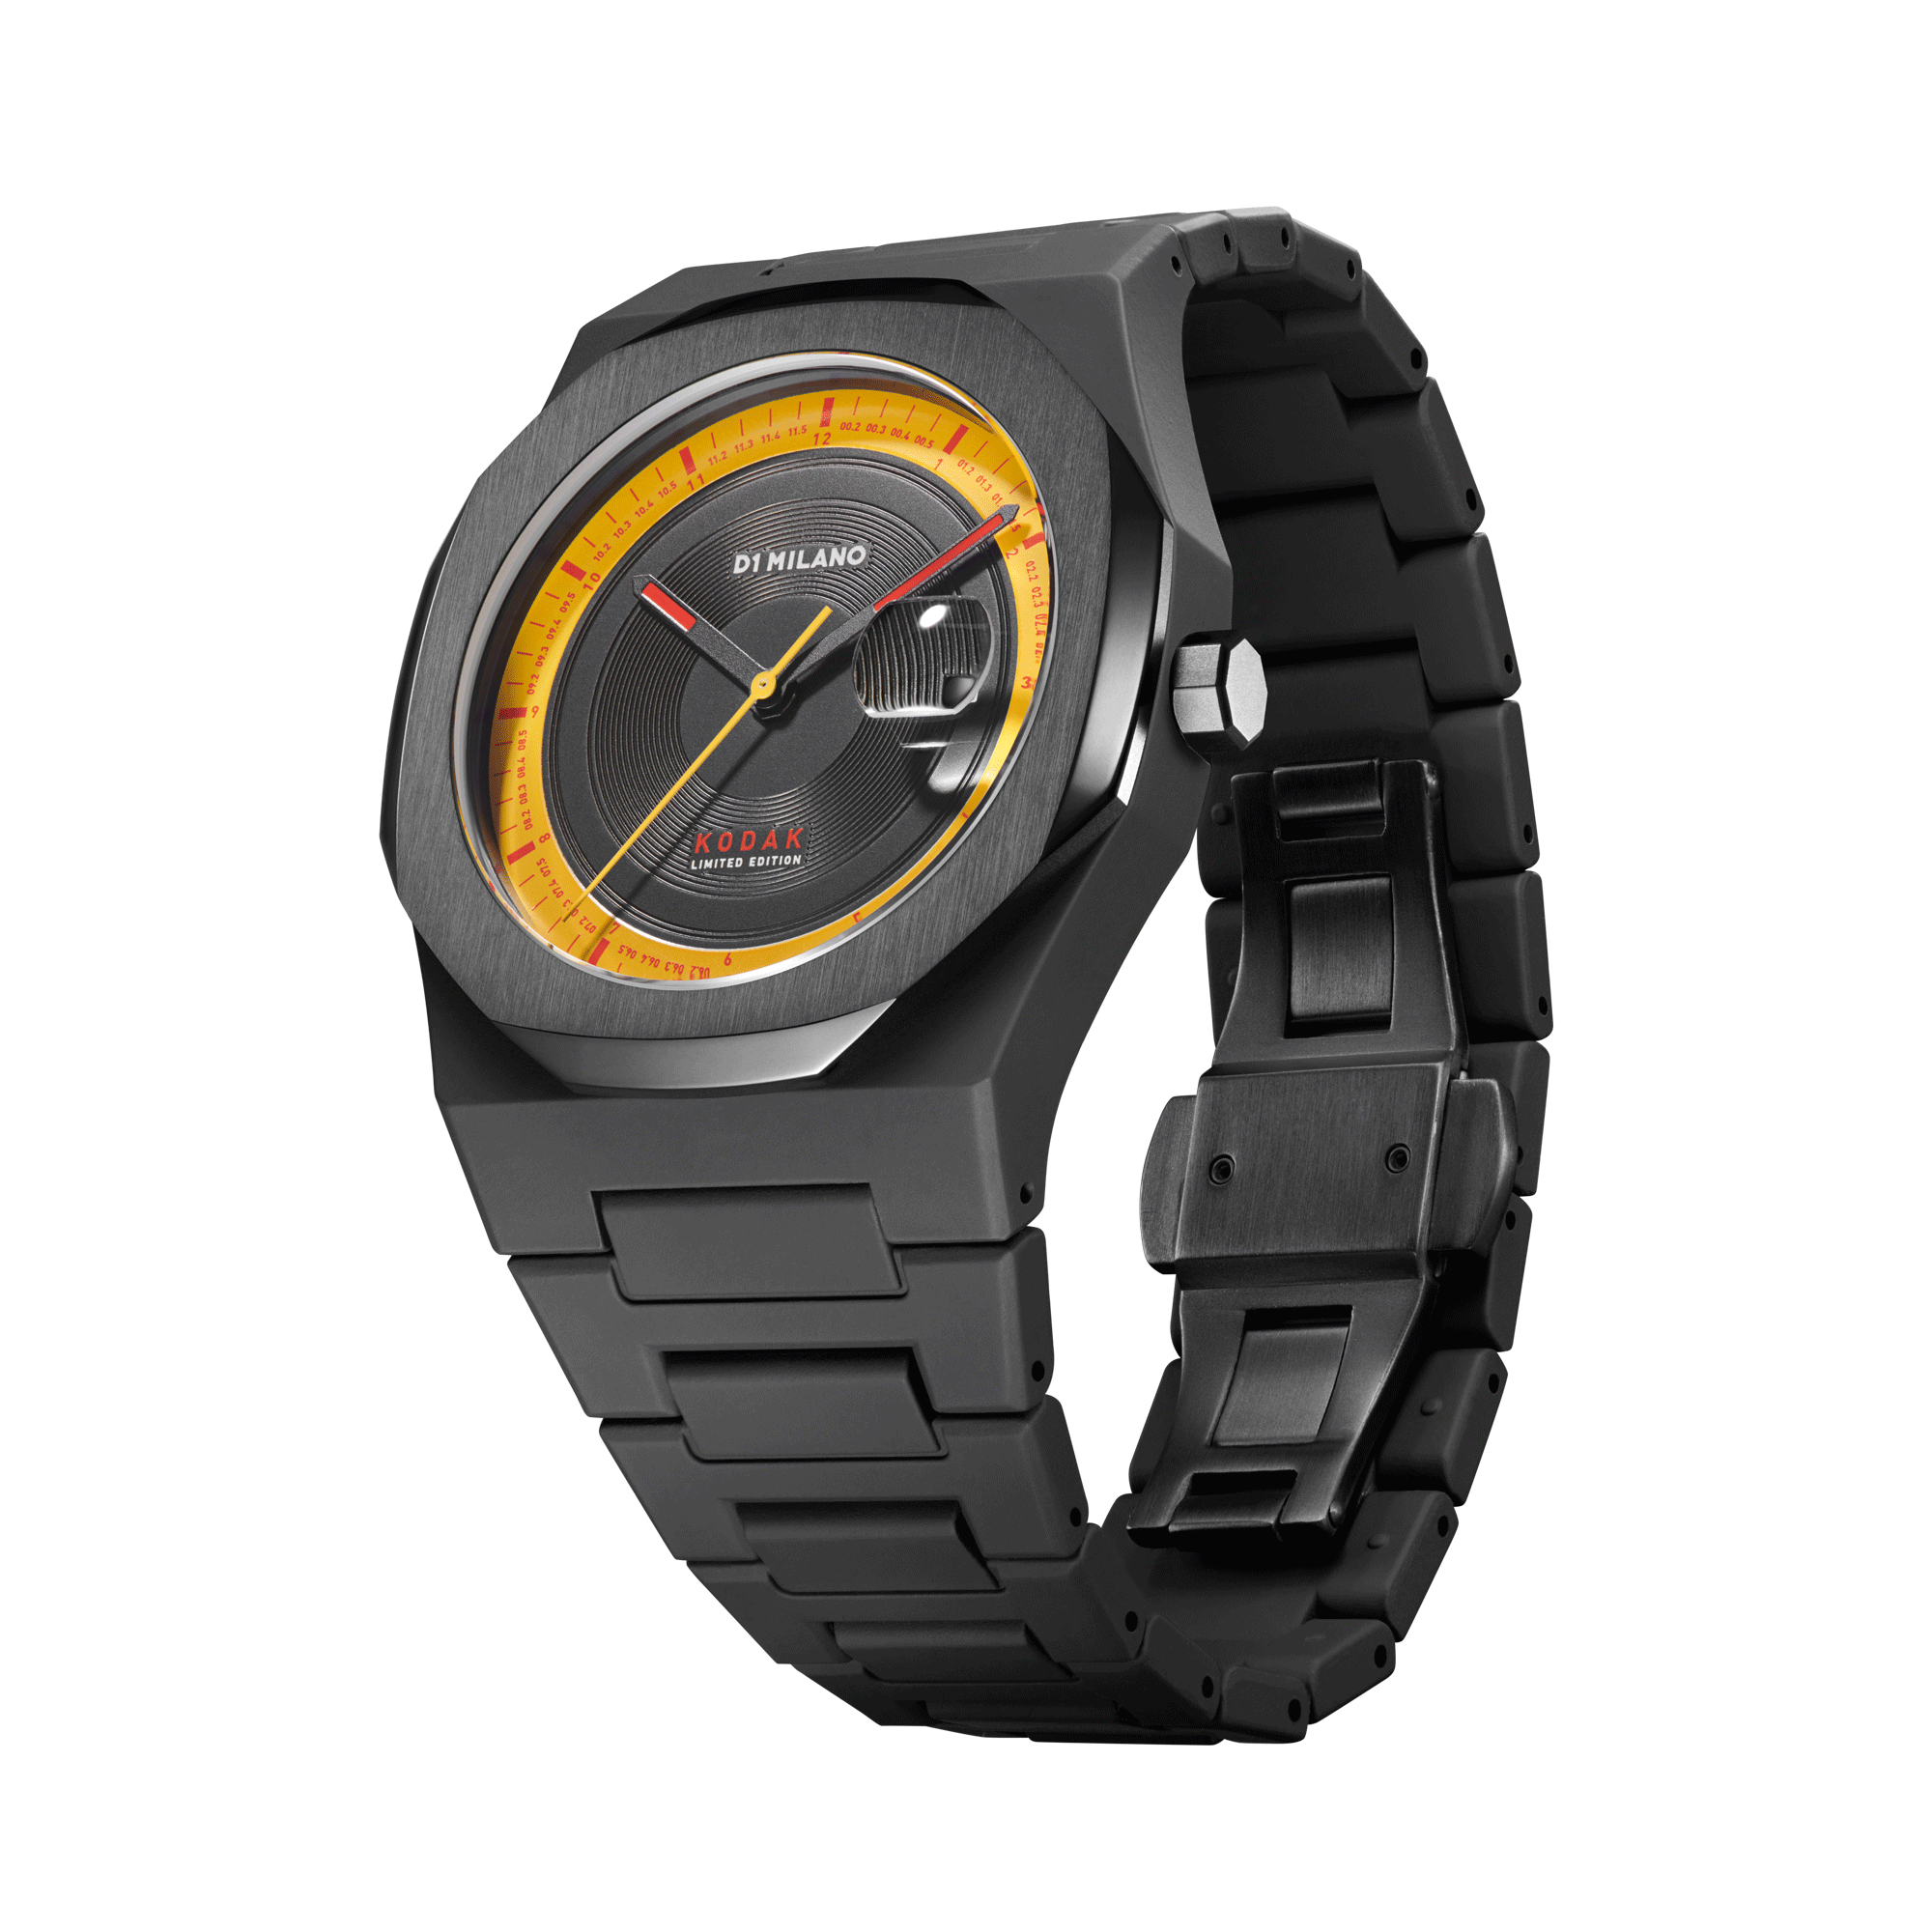 D1 MILANO KDBJ01 KODACHROME Analog Watch Limited Edition – The WATCH